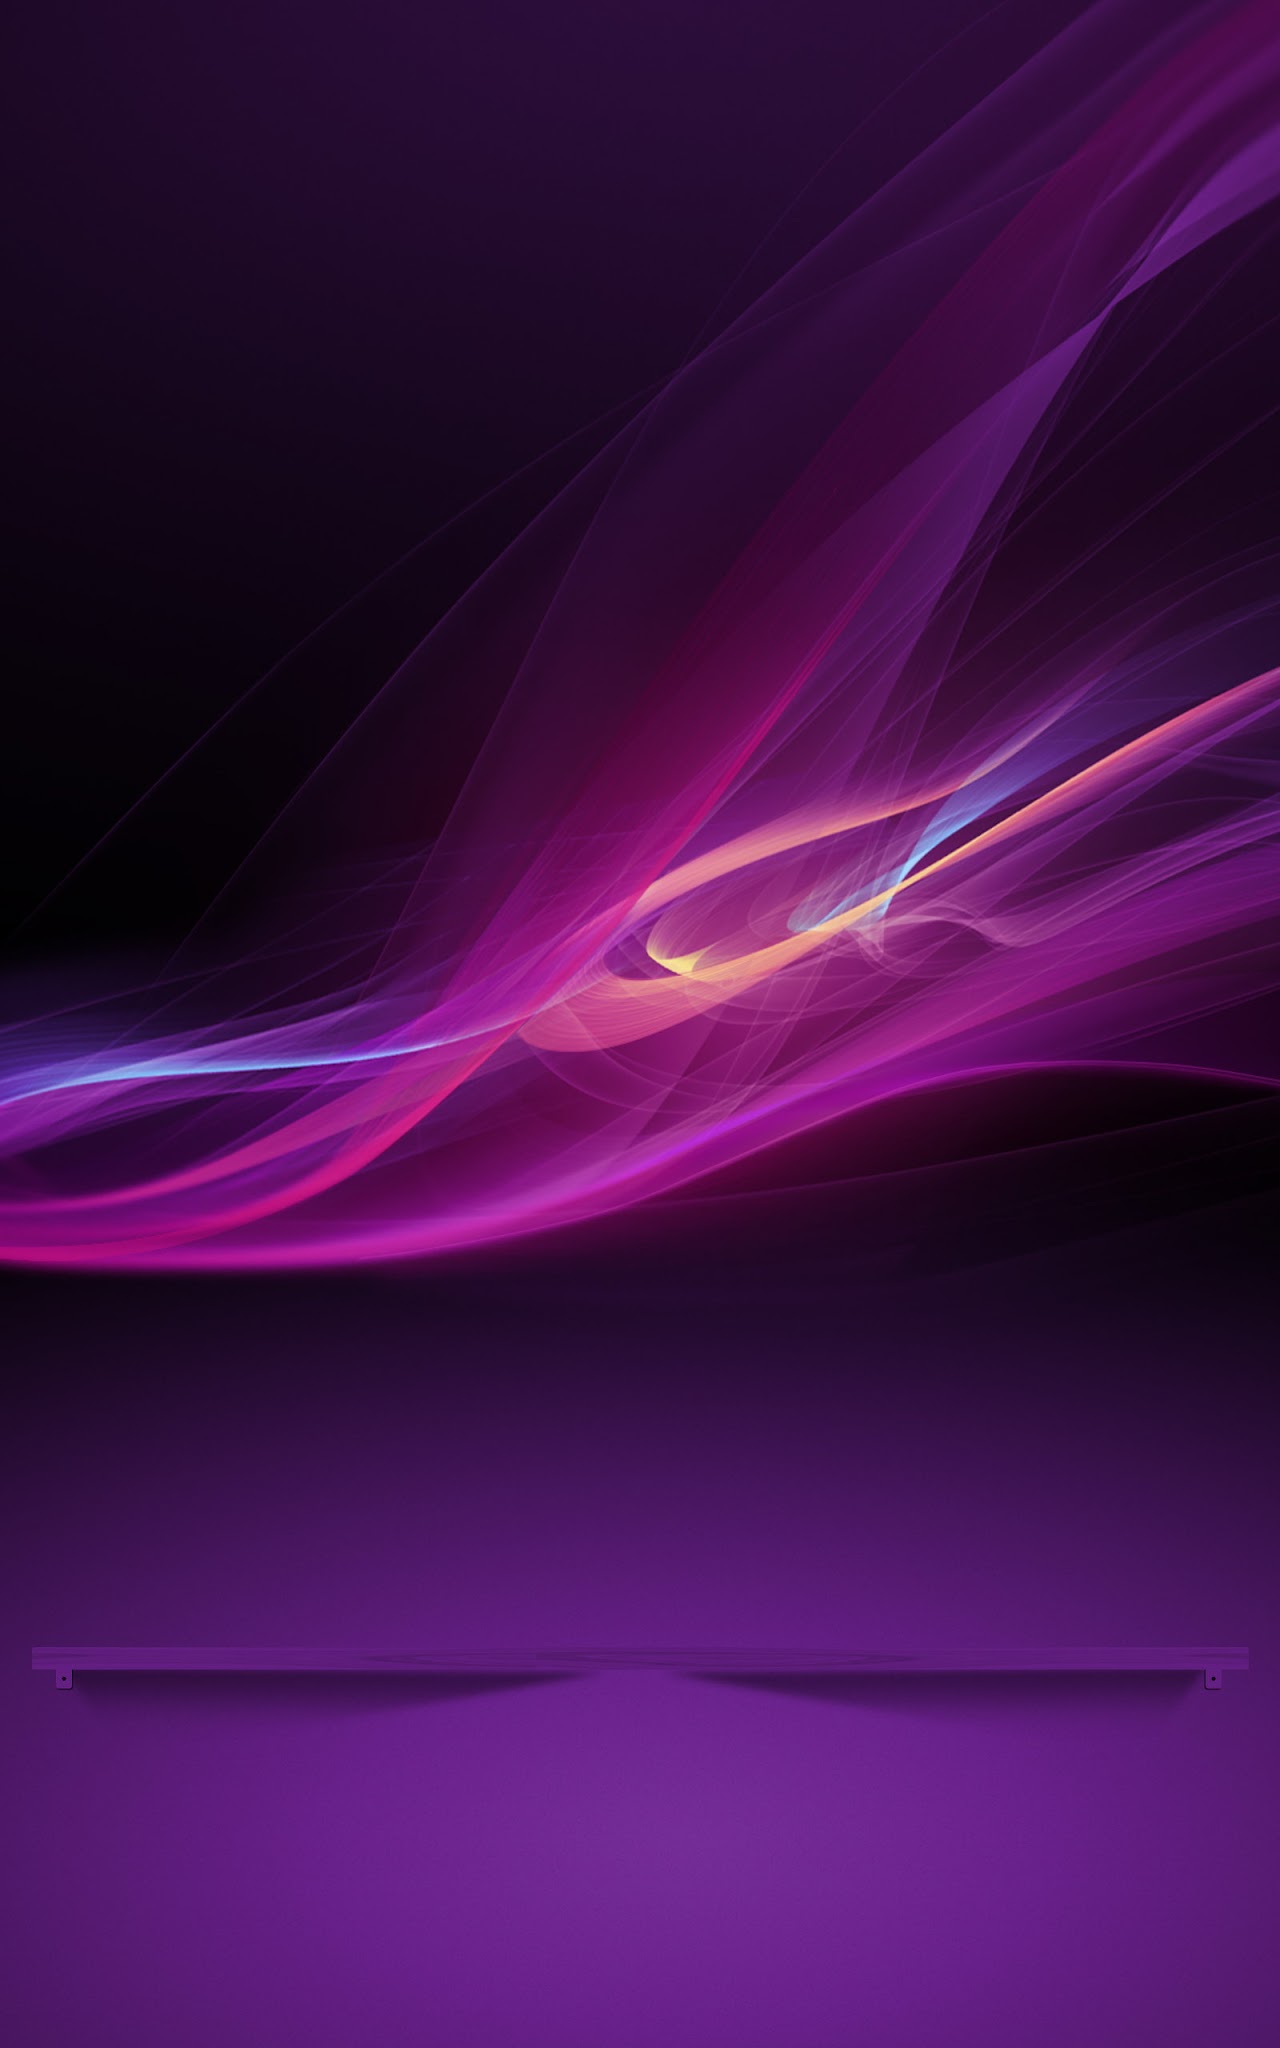 sfondo di samsung galaxy tab 4,viola,viola,blu,lilla,leggero